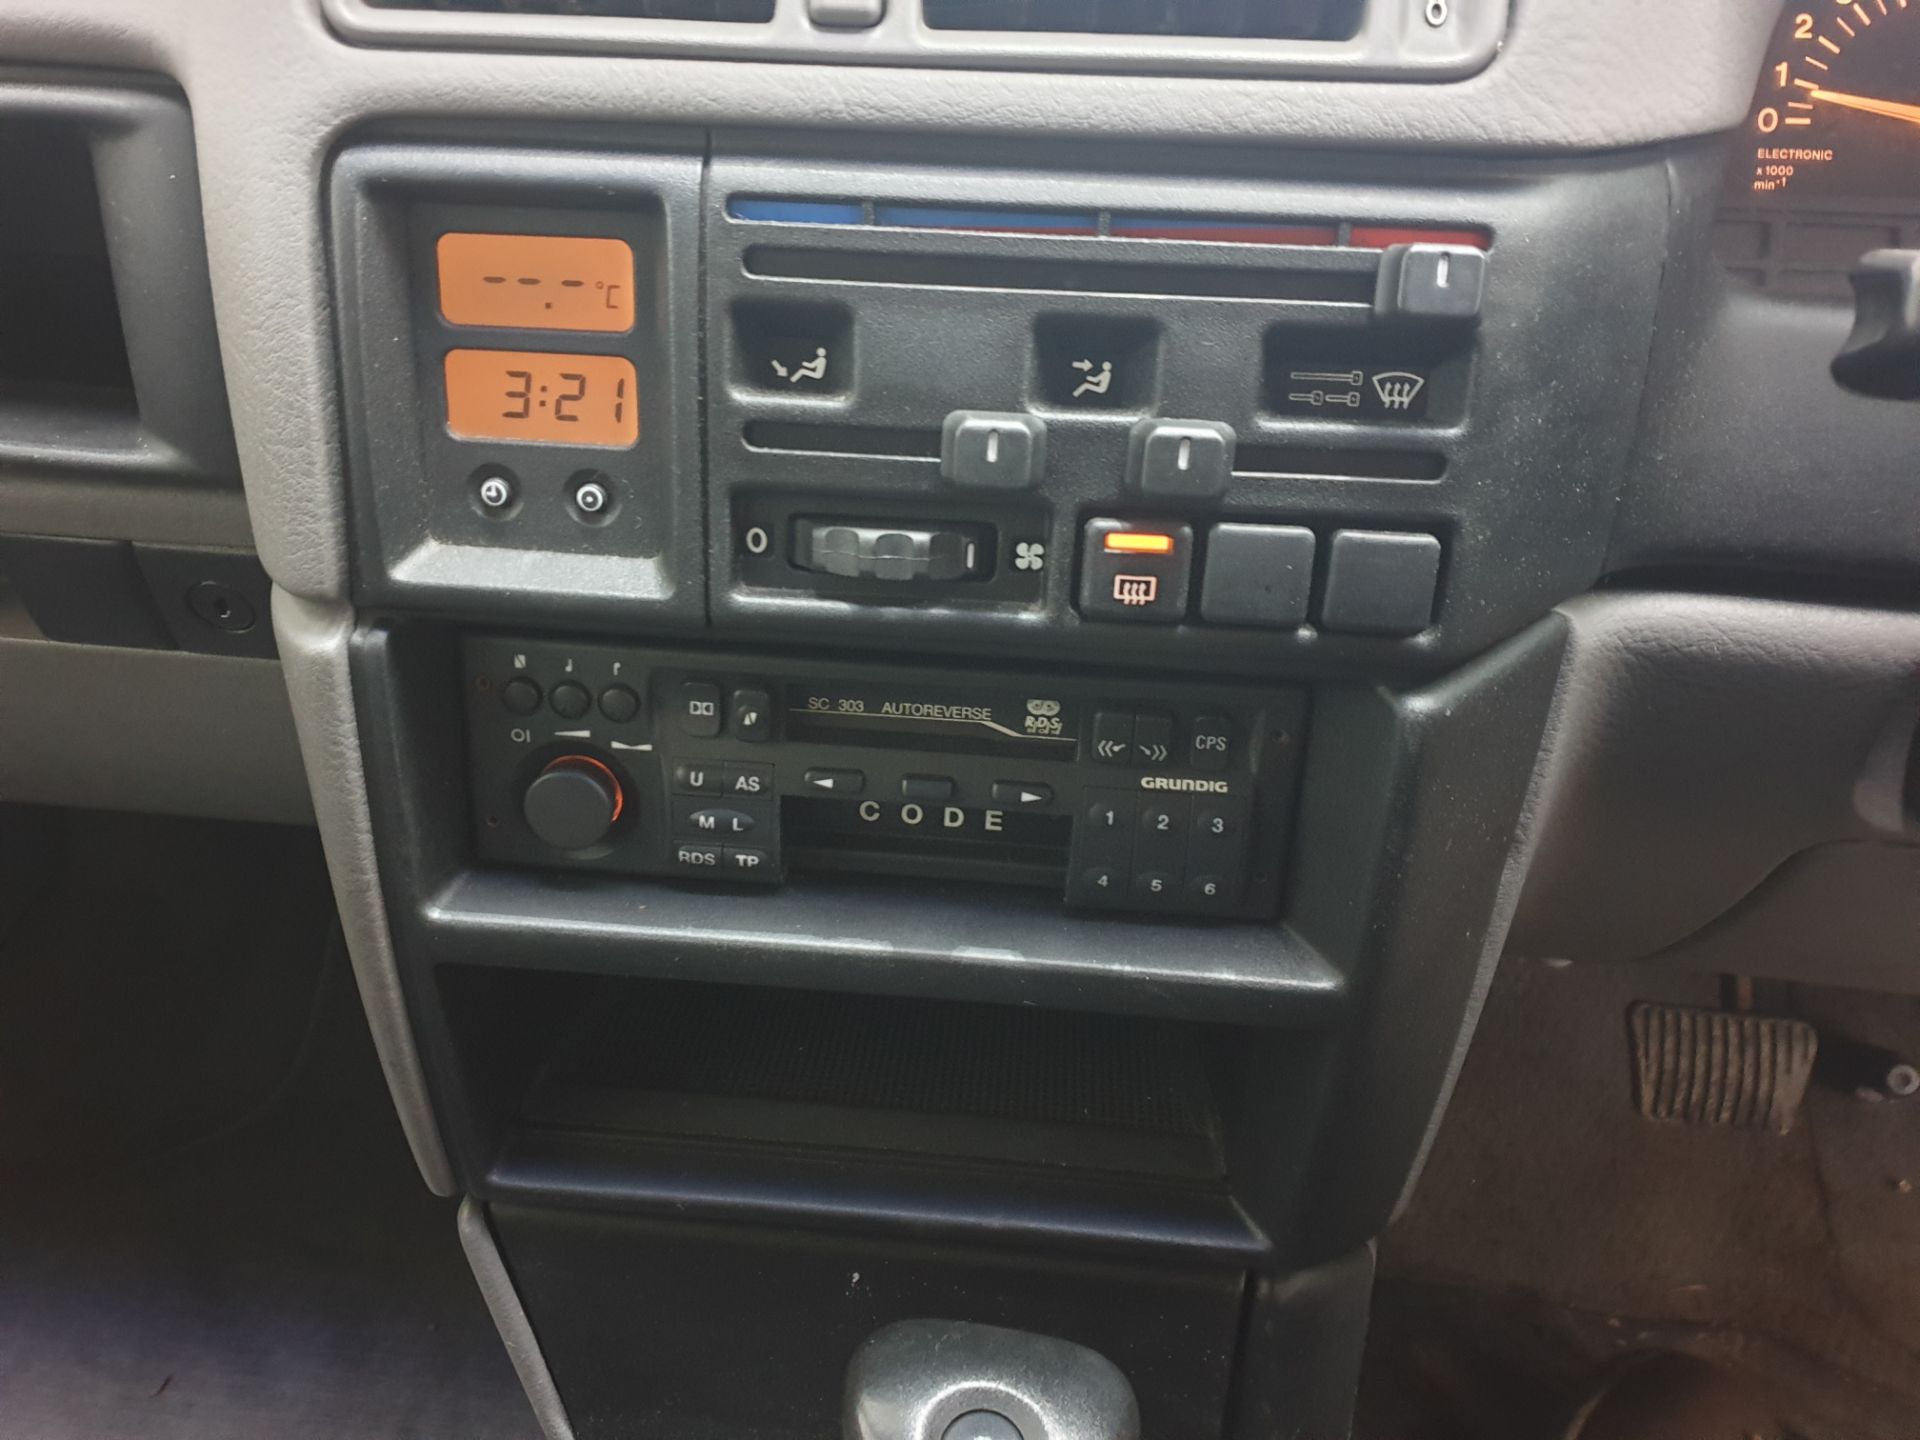 1994 Vauxhall Cavalier CD Auto - Image 12 of 16